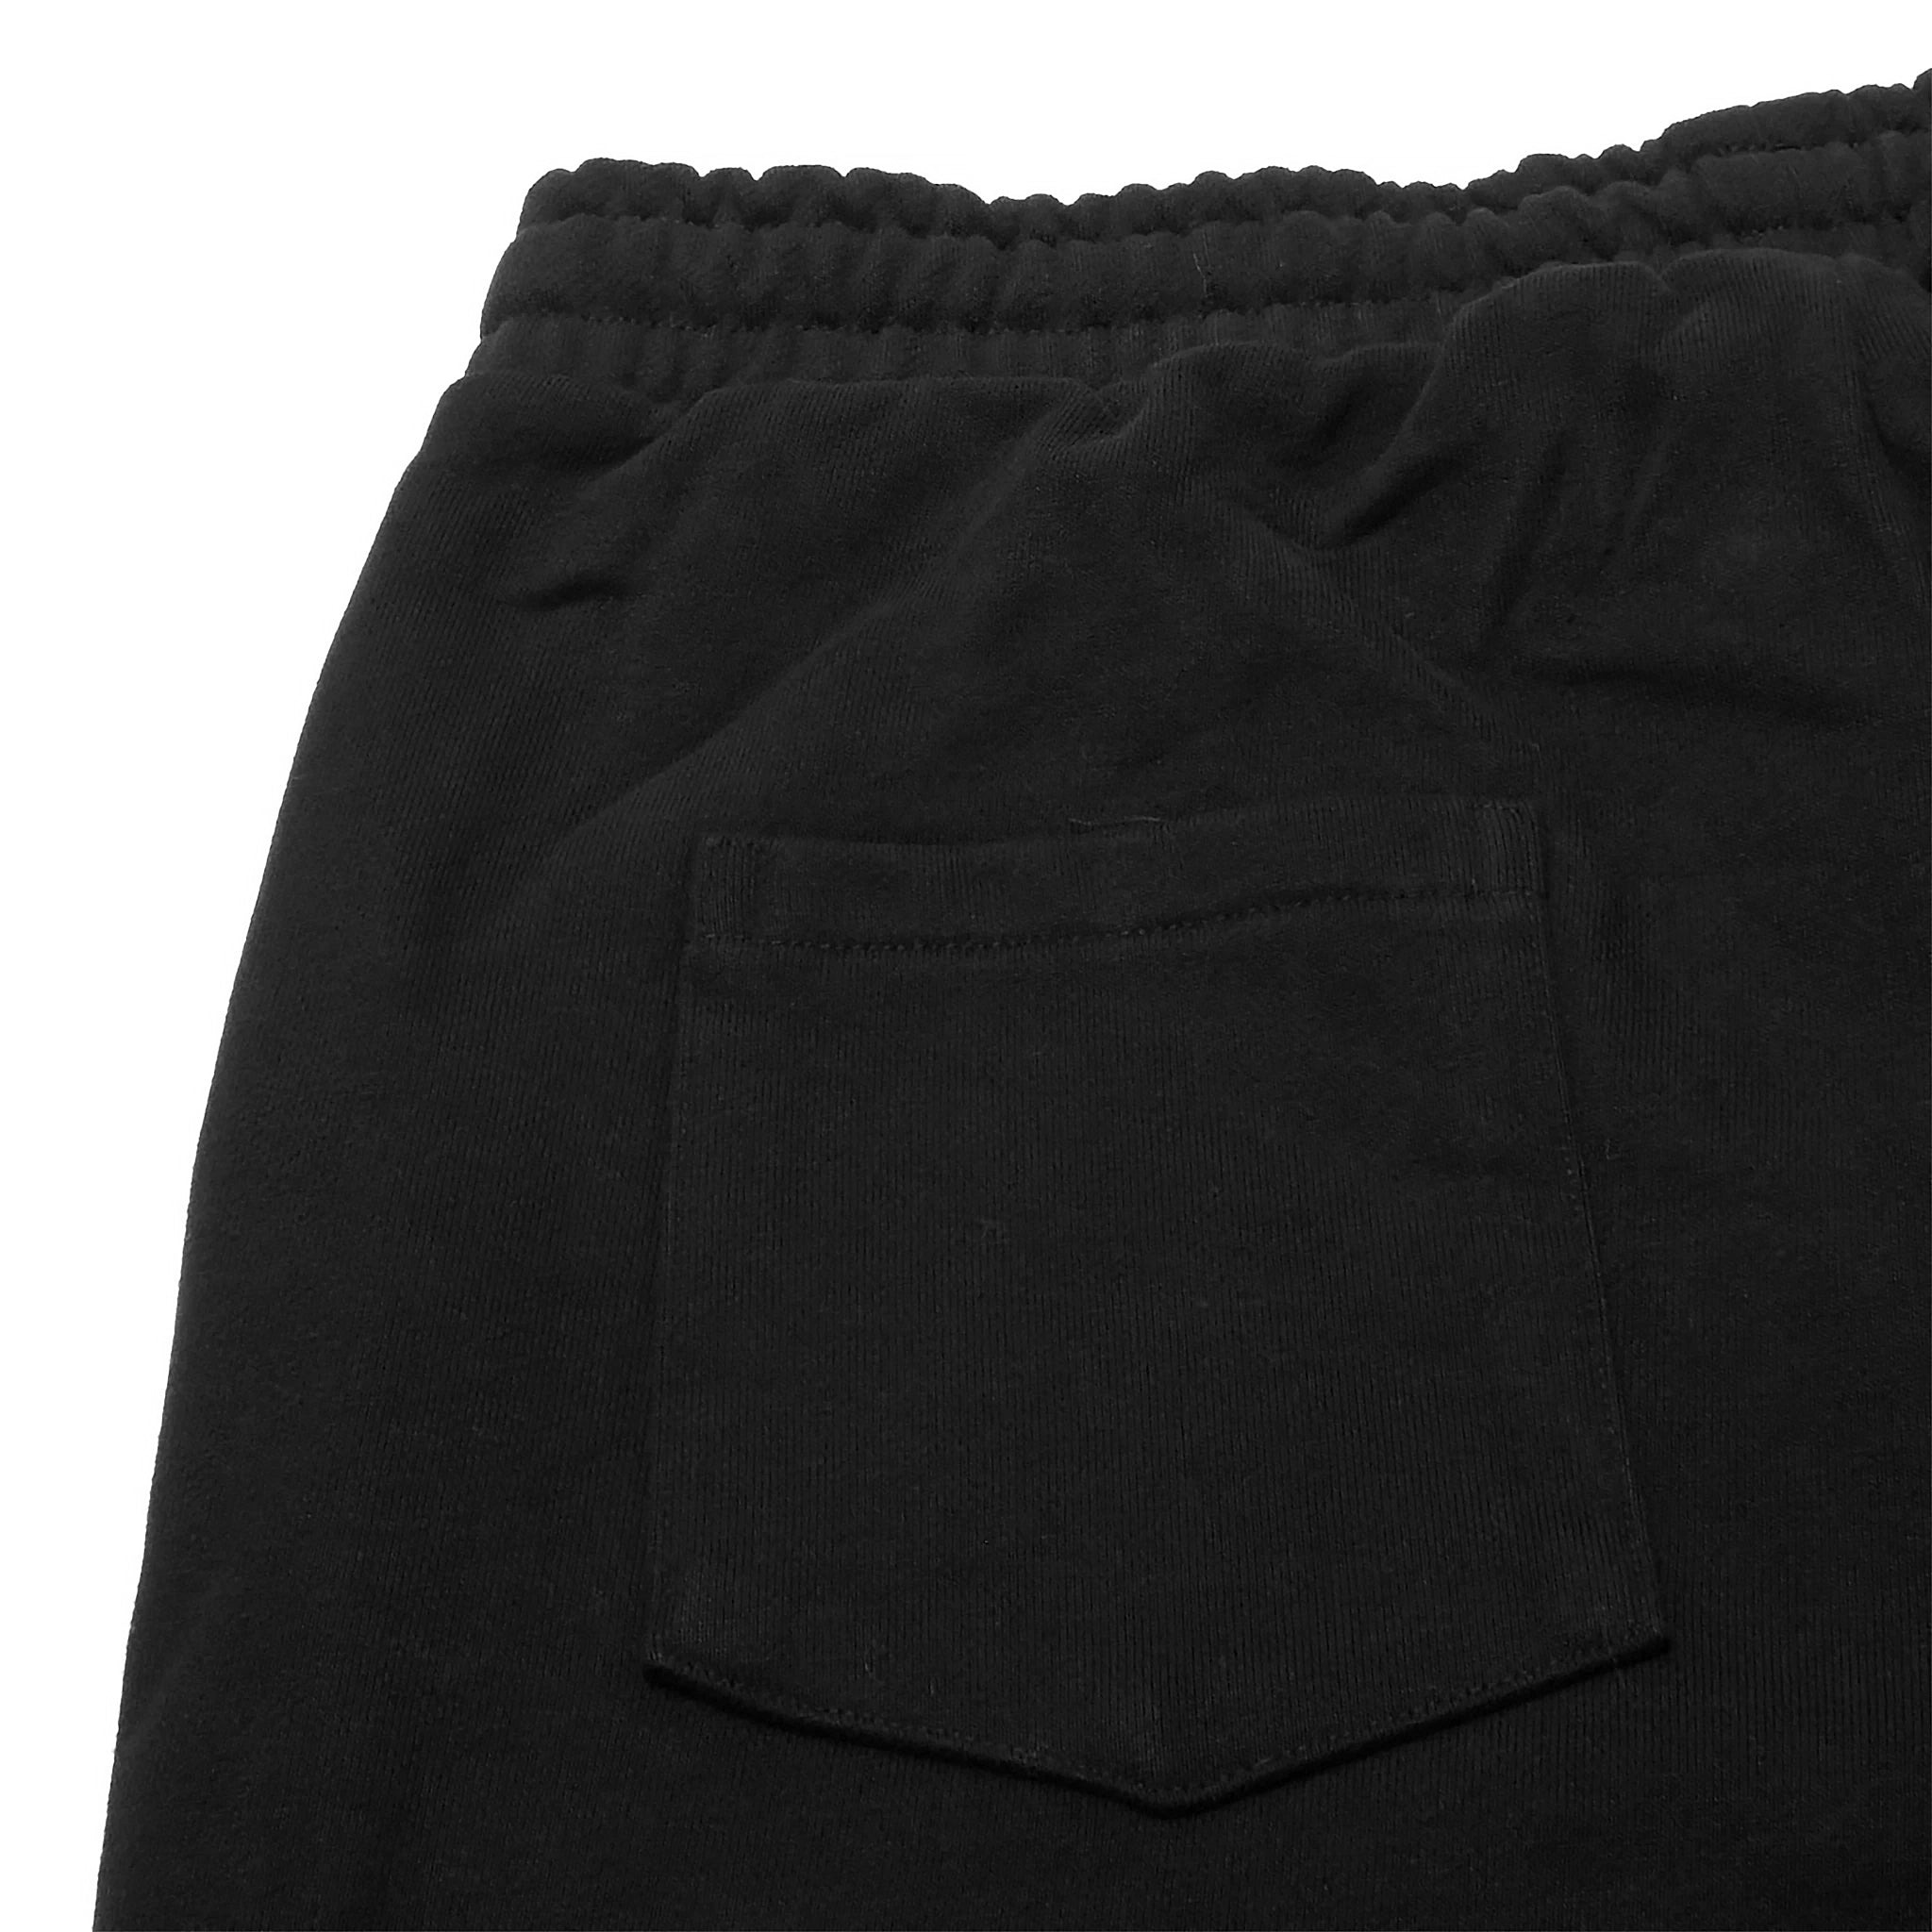 Back pocket view of Carsicko London Black Track Pants